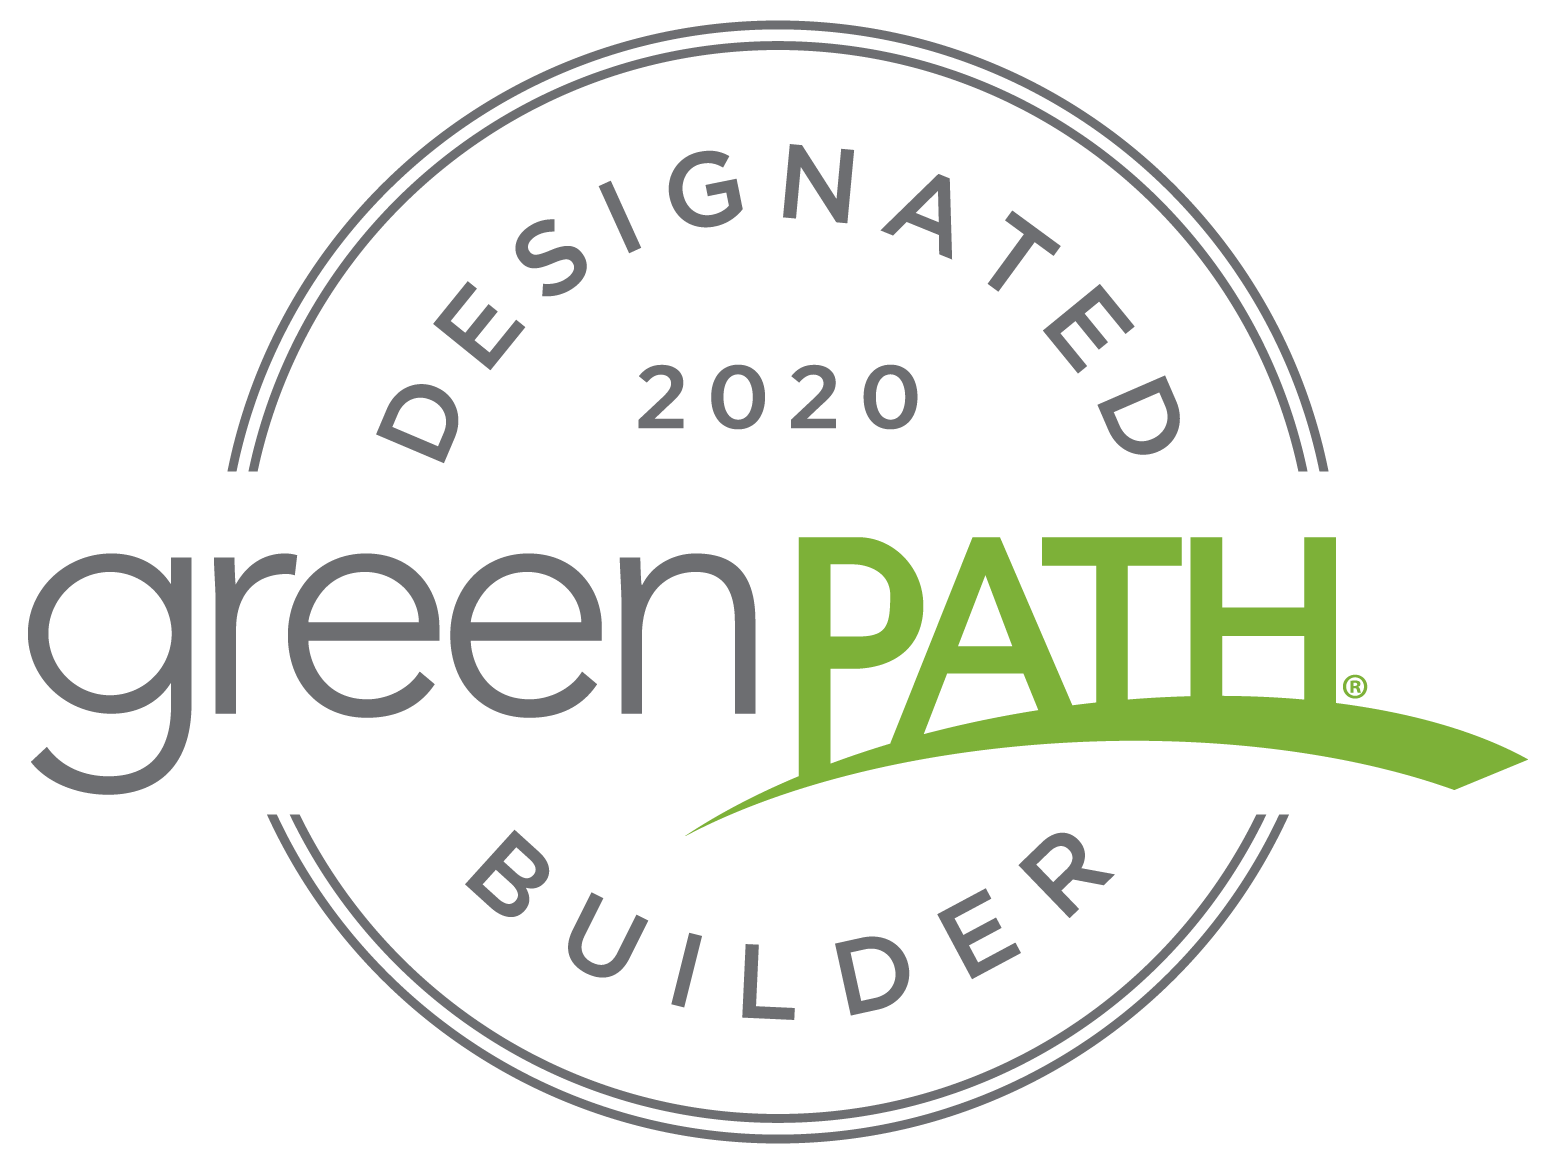 Green Path Builder